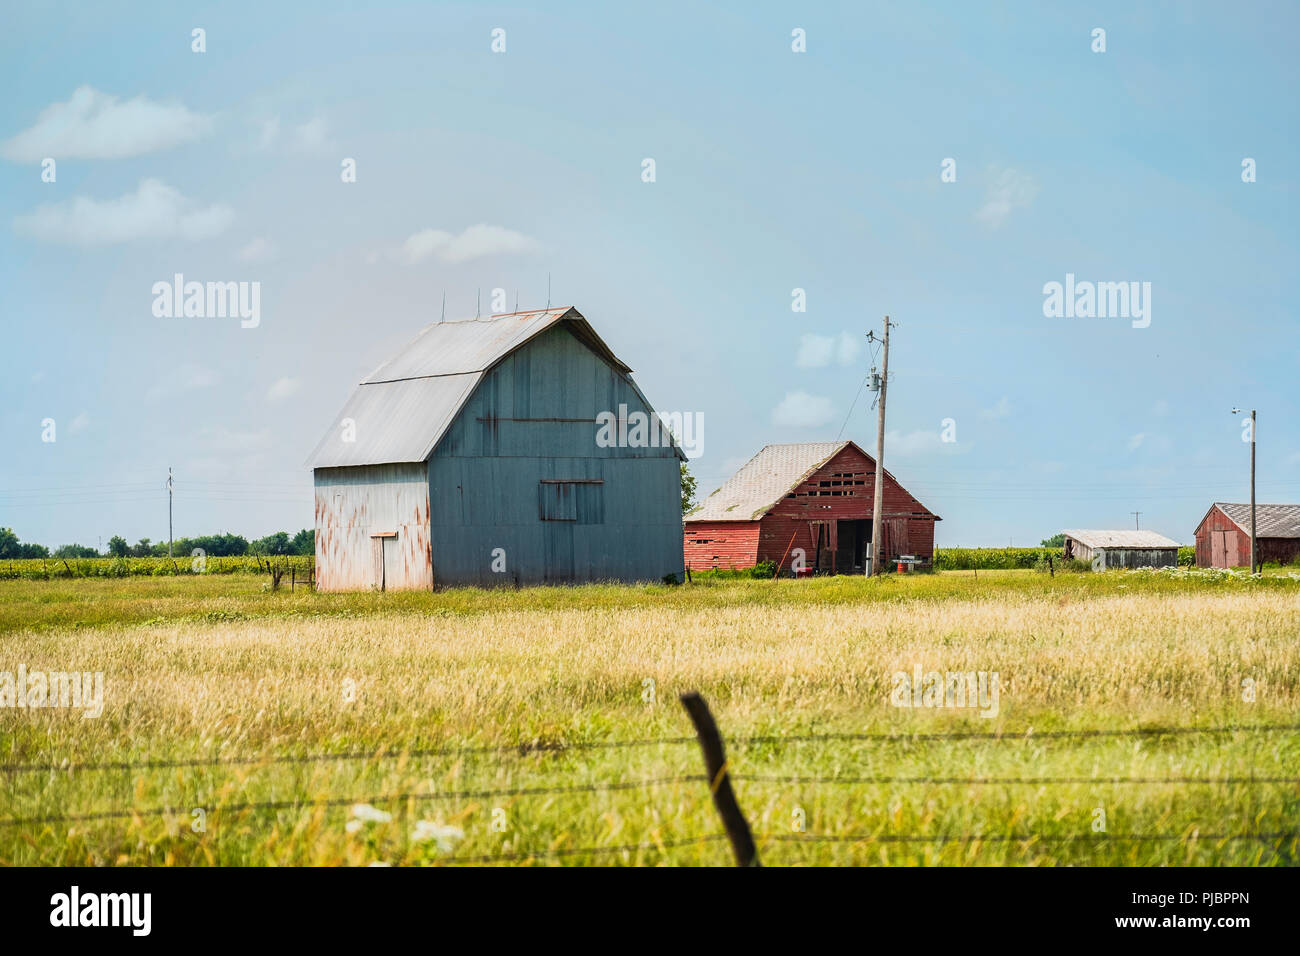 Farm buildings, barns, in rural Kansas, a few miles from Wichita, USA. Stock Photo